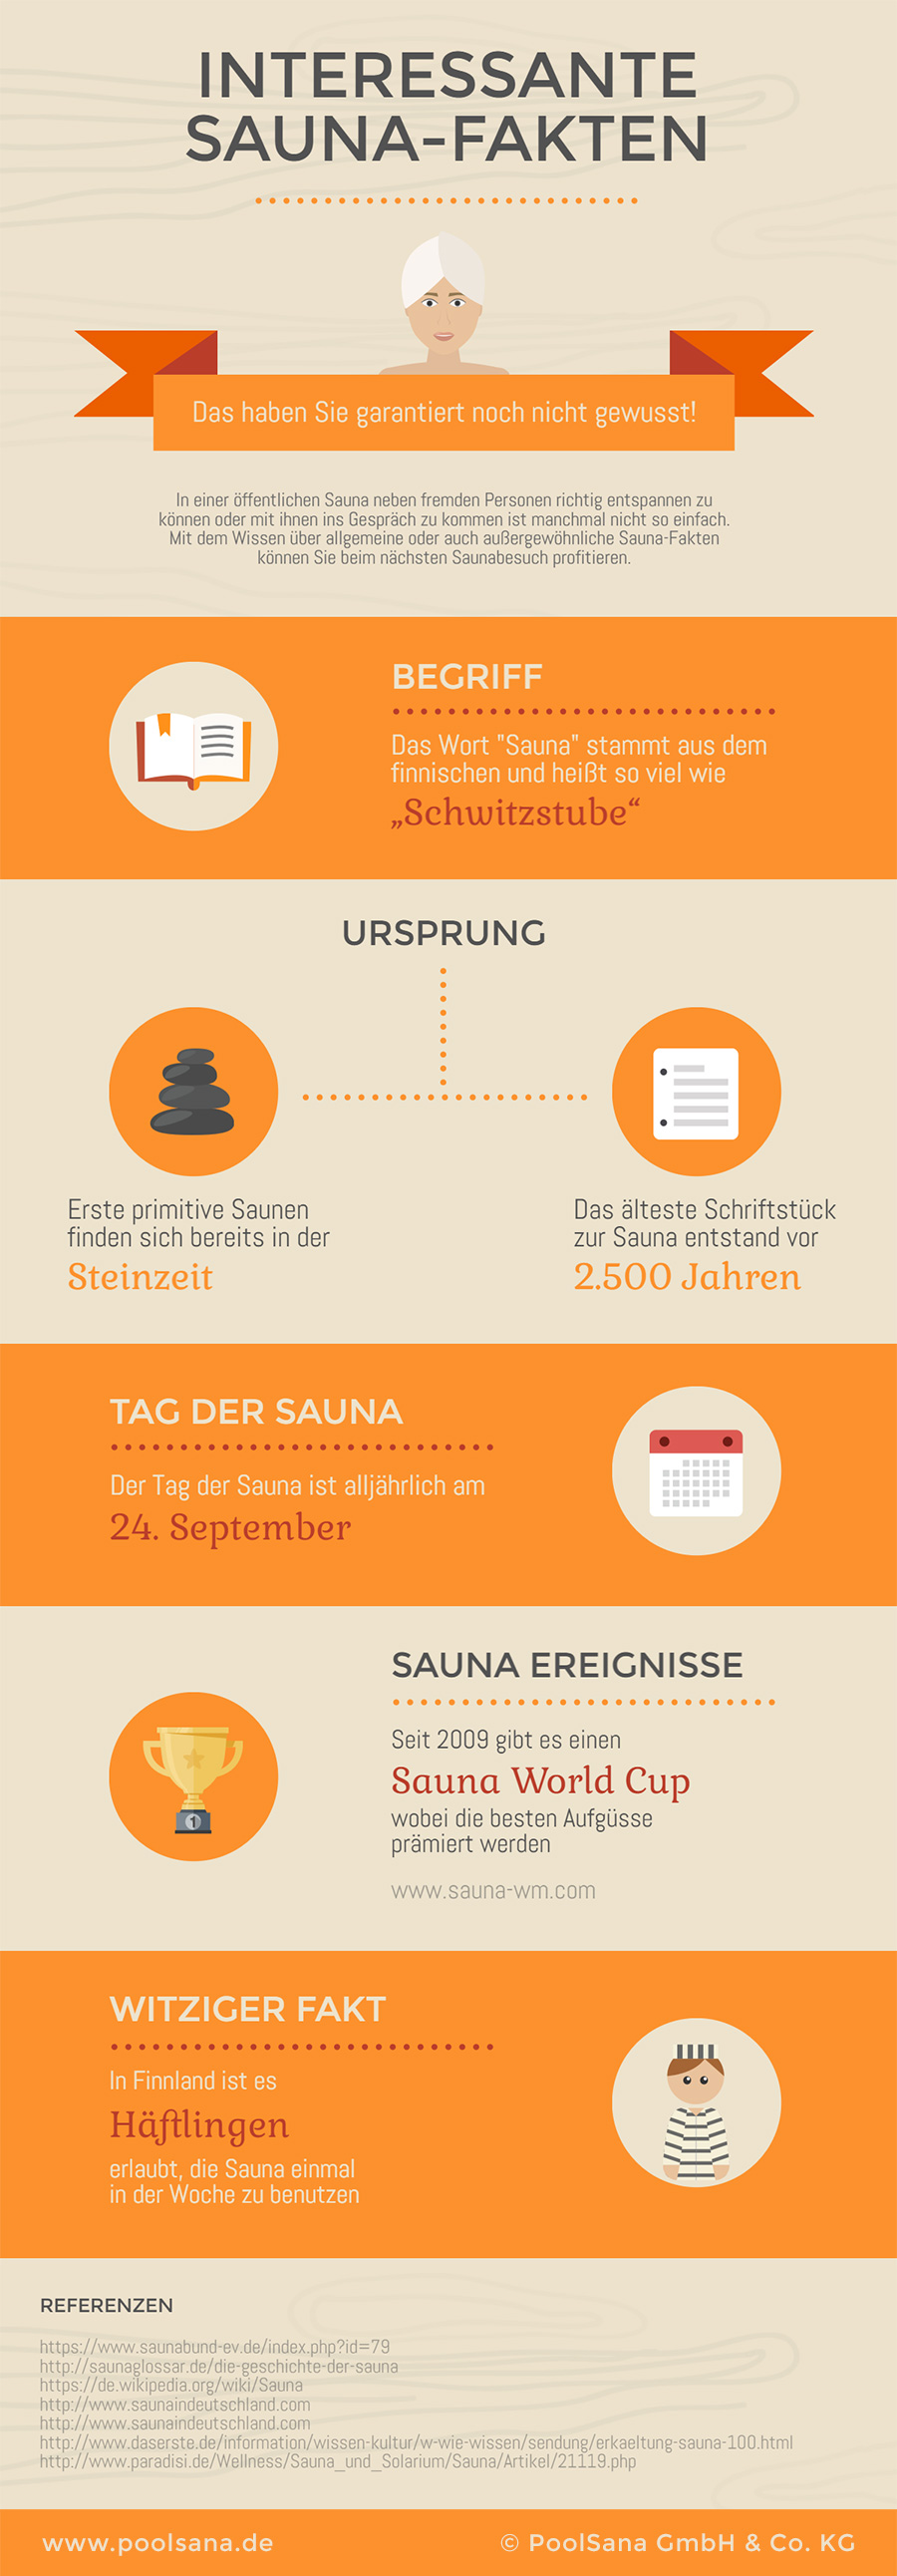 Infografik über Sauna-Fakten